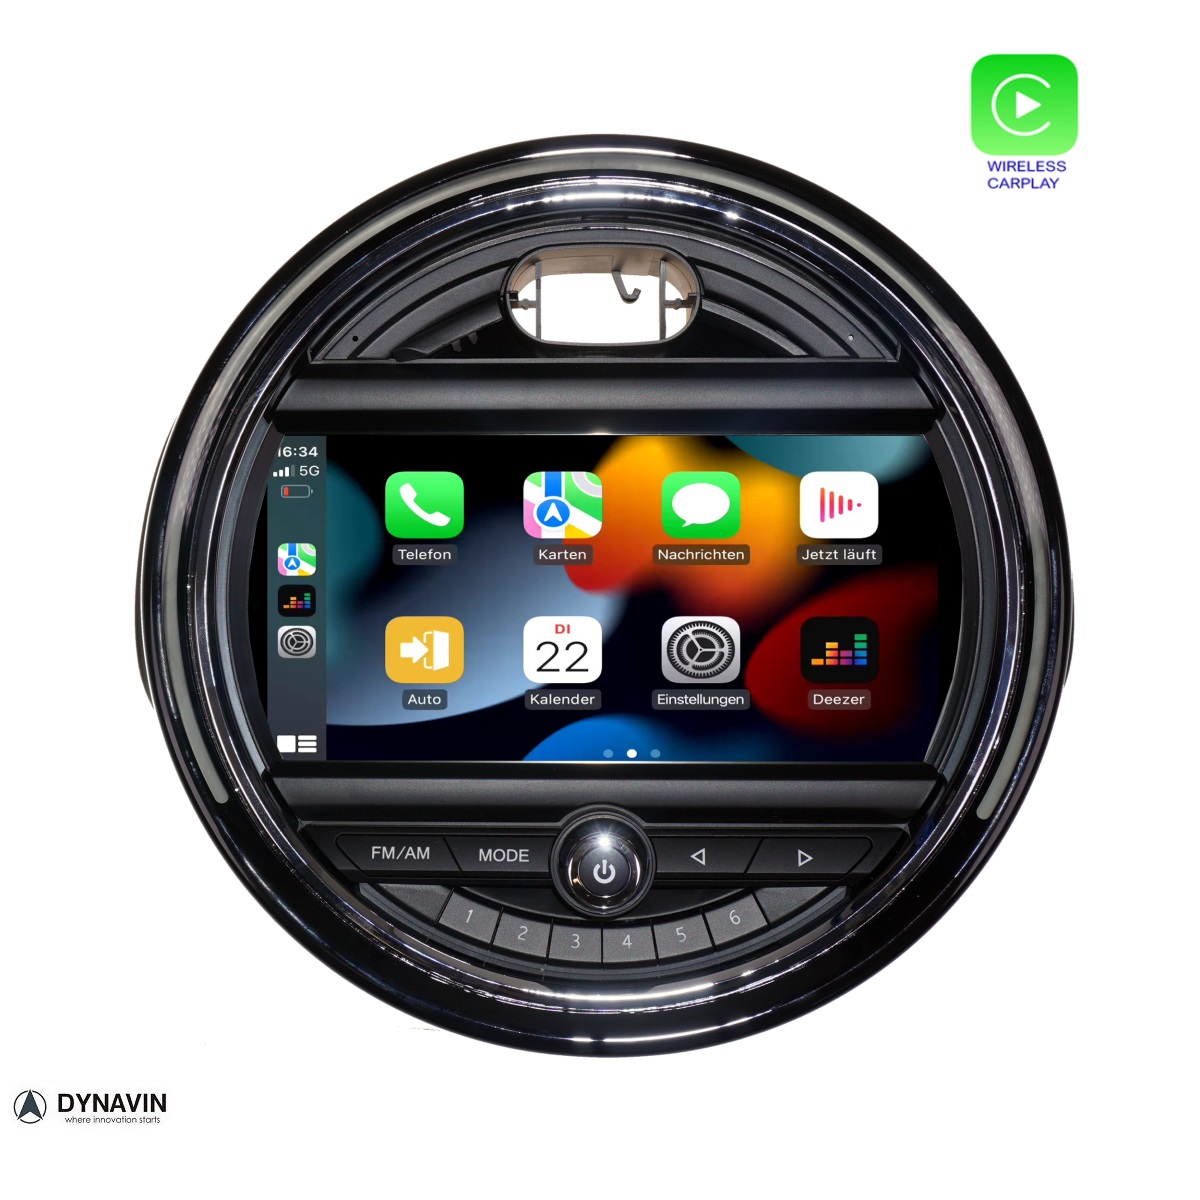 Navigatie Mini dvd carkit touchscreen usb sd wifi android 12 met apple carplay